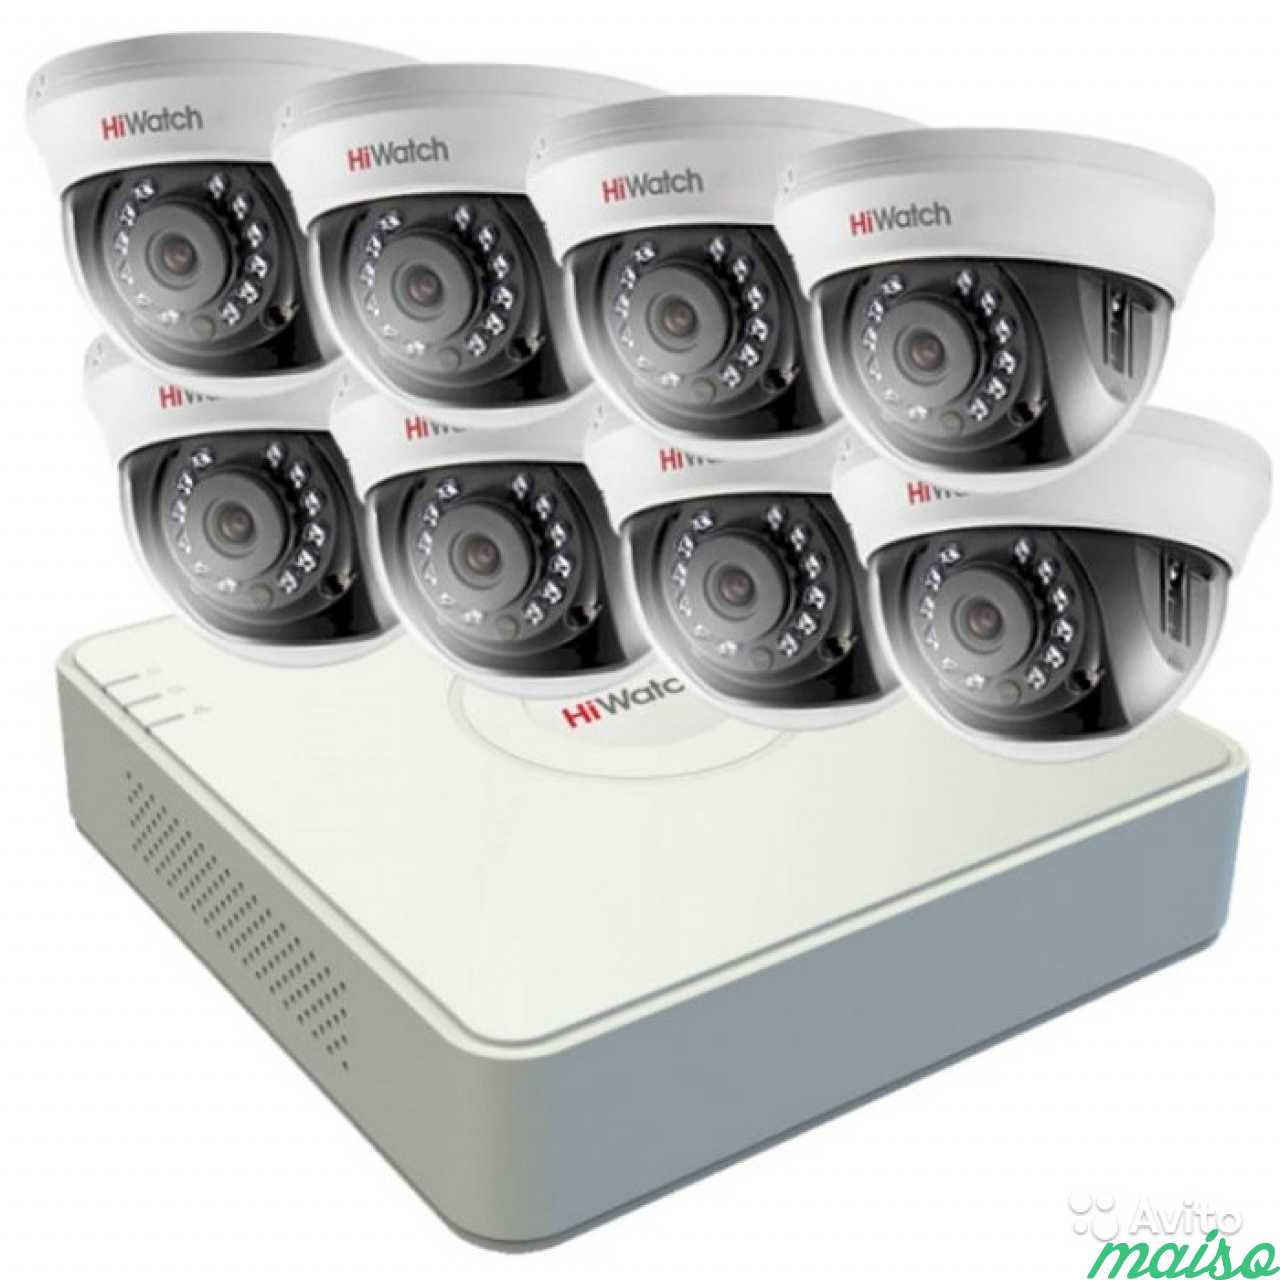 Hiwatch 4 регистратор. Комплект HIWATCH t209p. Комплект видеонаблюдения HIWATCH IP 4. Комплект видеонаблюдения Hikvision на 4 камеры IP. Комплект 8 камер HIWATCH.